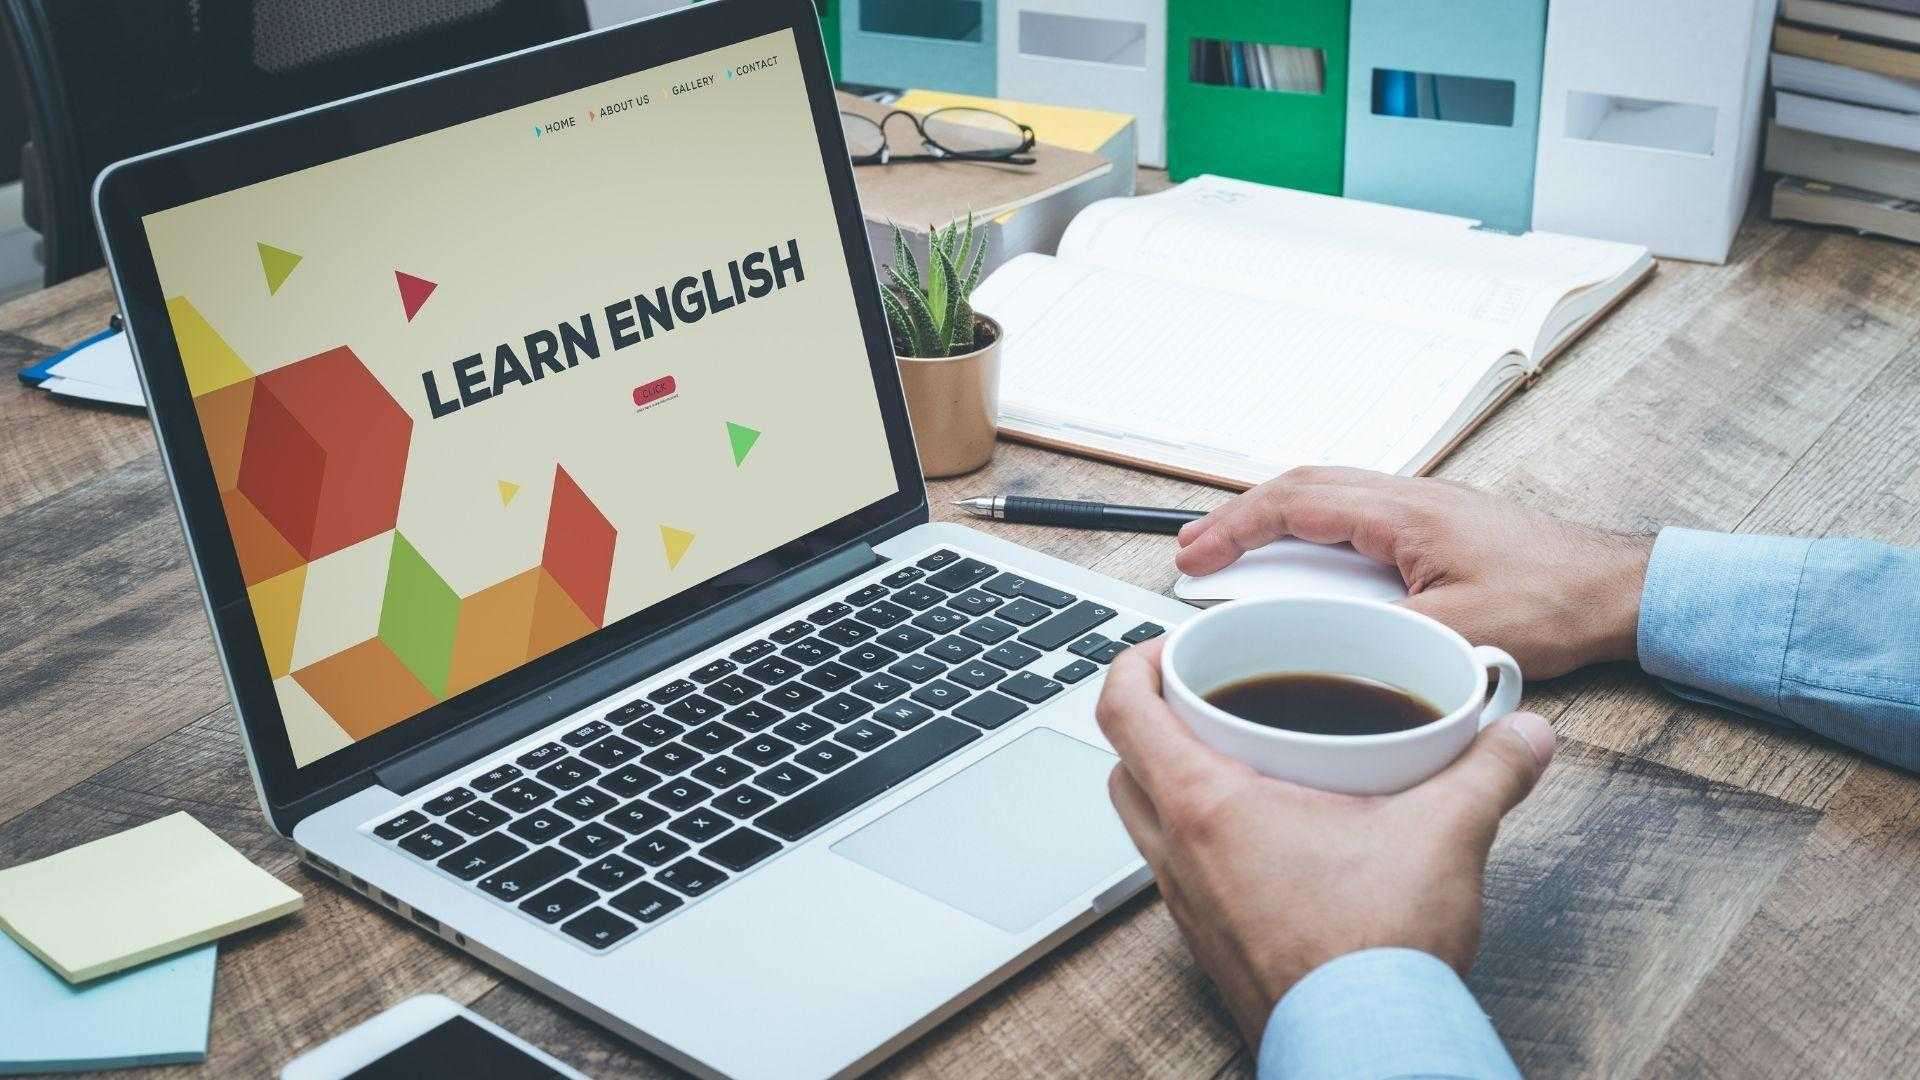 Tips Belajar Bahasa Inggris